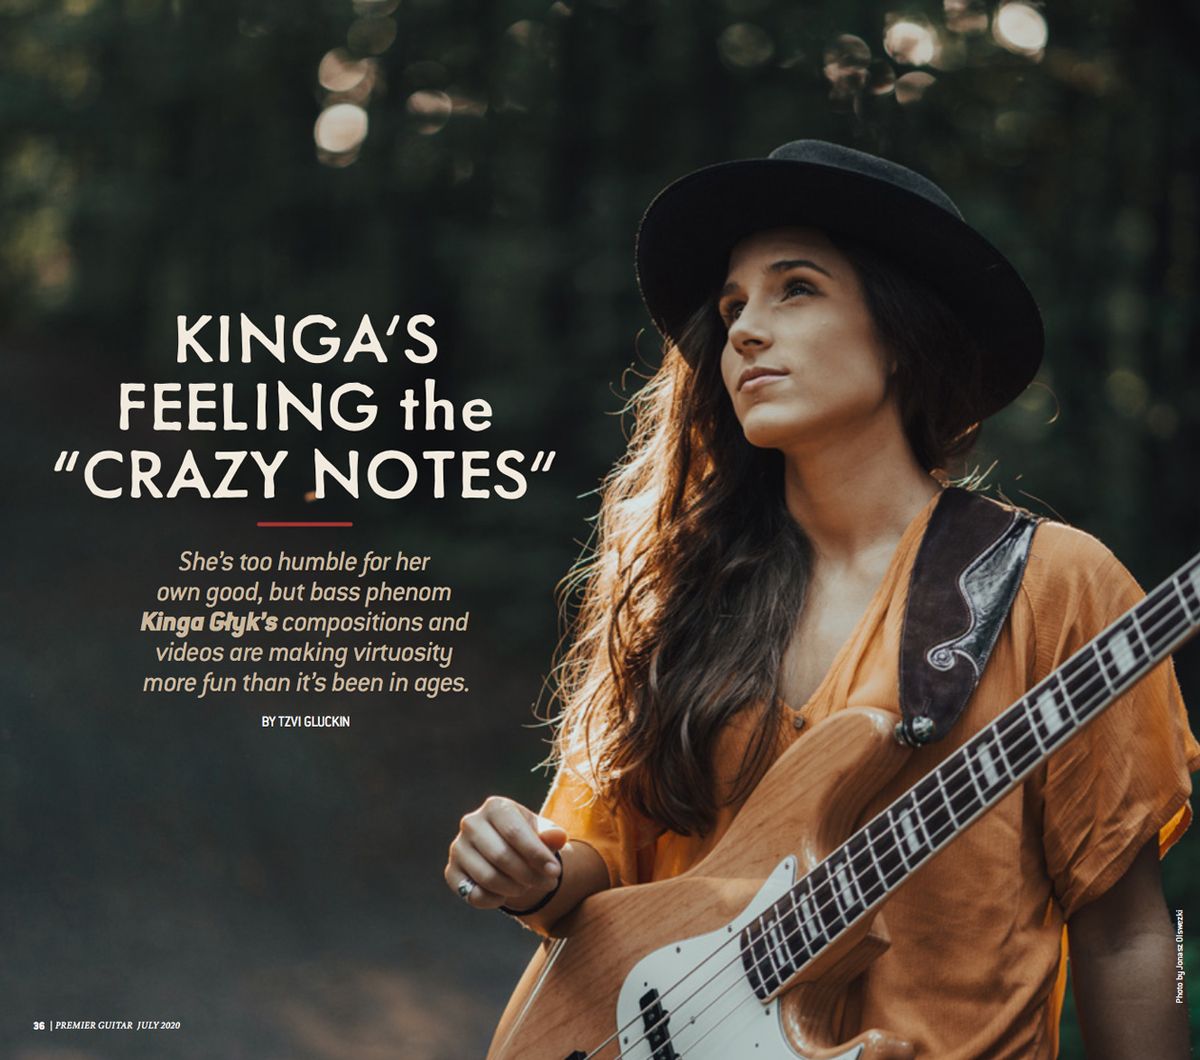 Kinga’s Feeling the “Crazy Notes”